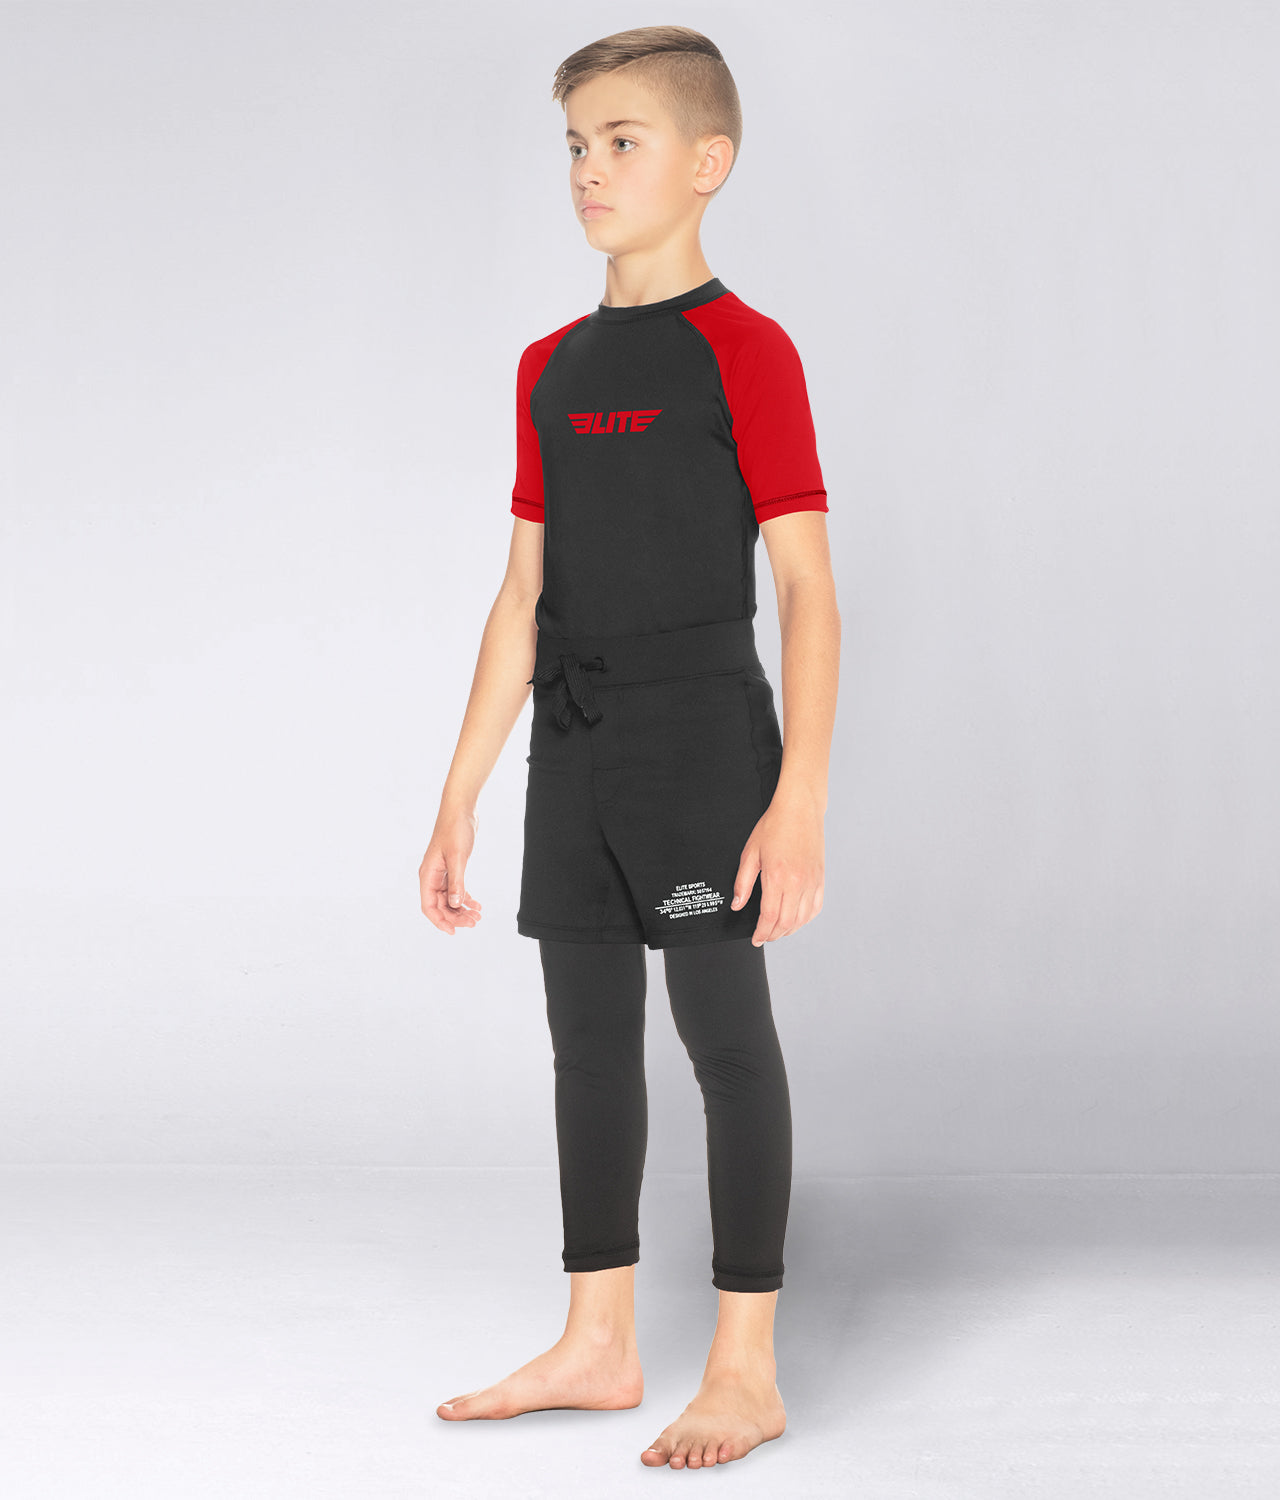 Elite Sports Kids' Standard Red Short Sleeve BJJ Rash Guard Side View